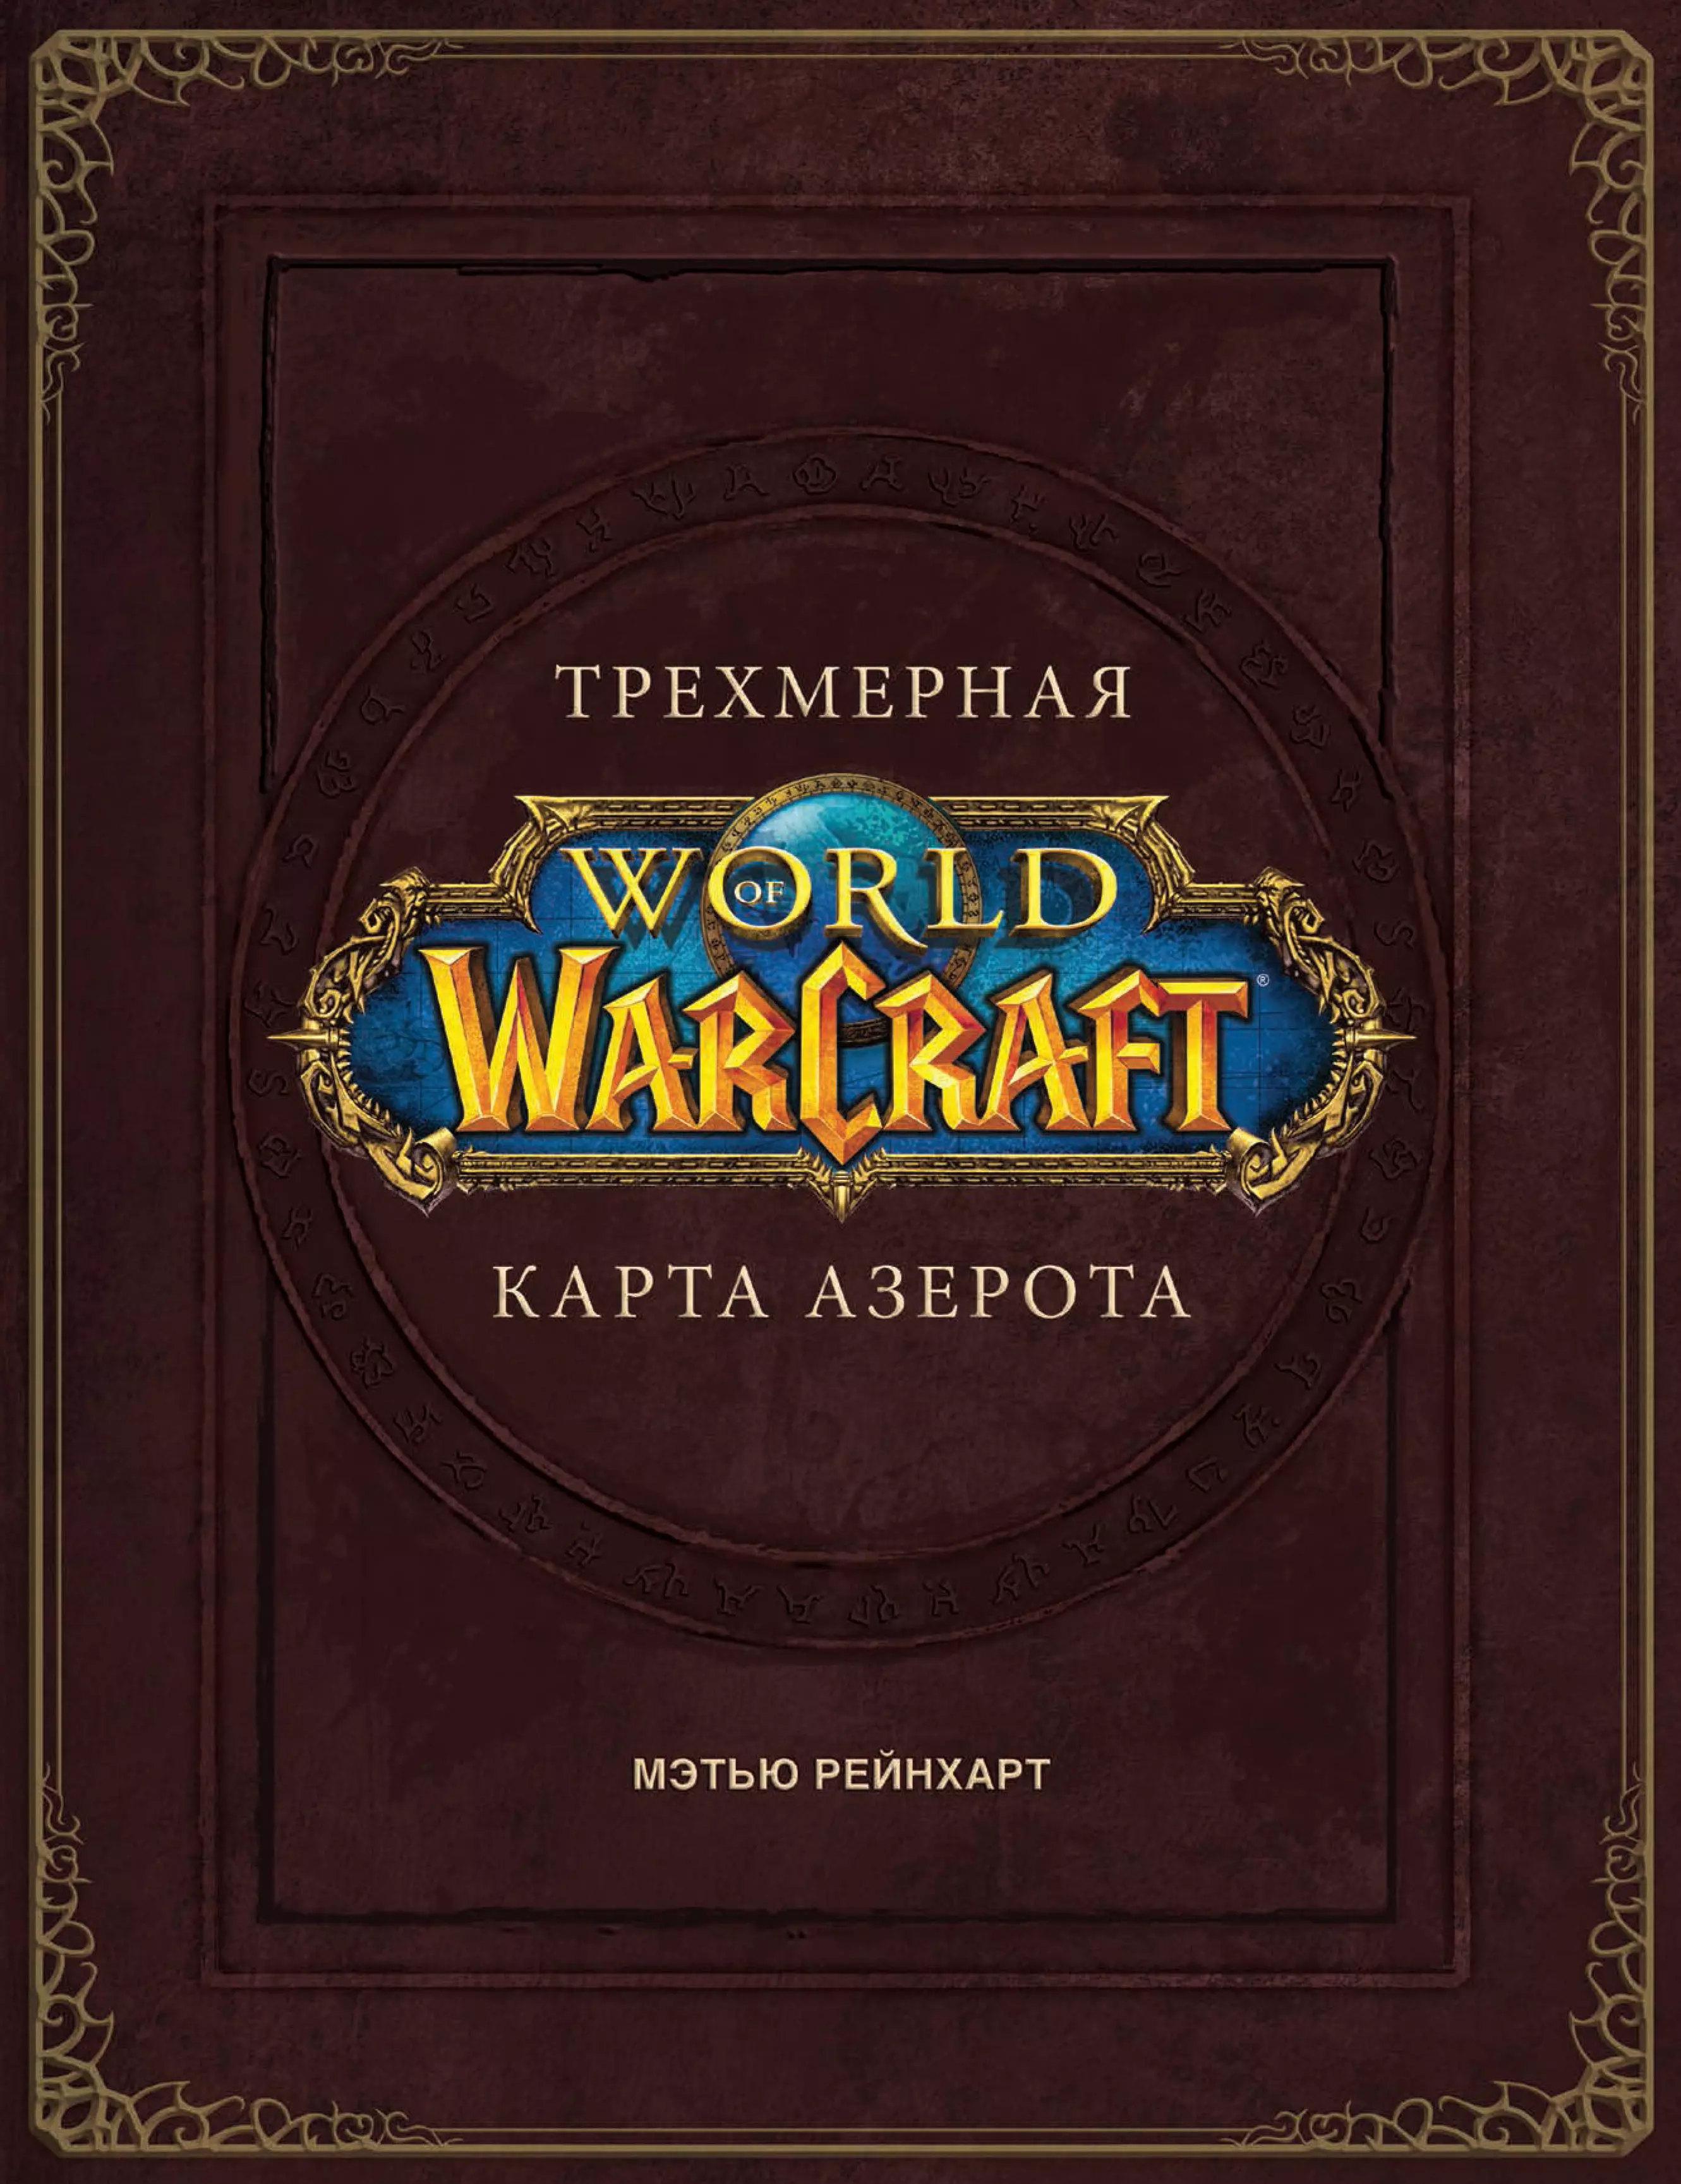 Брукс Роберт - World of Warcraft. Трехмерная карта Азерота